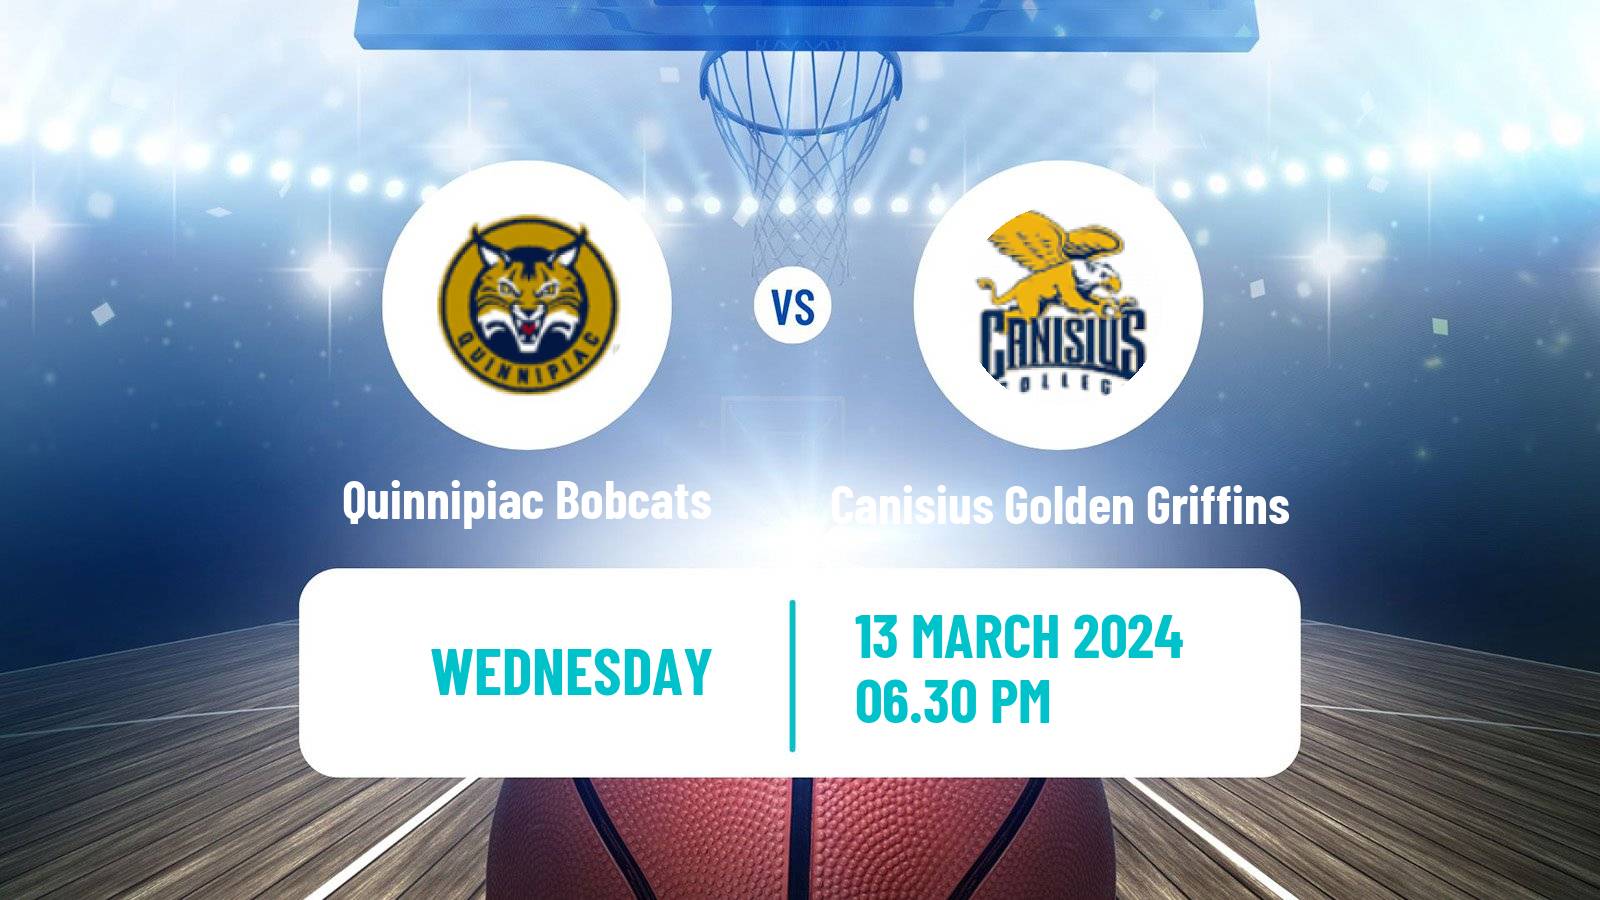 Basketball NCAA College Basketball Quinnipiac Bobcats - Canisius Golden Griffins